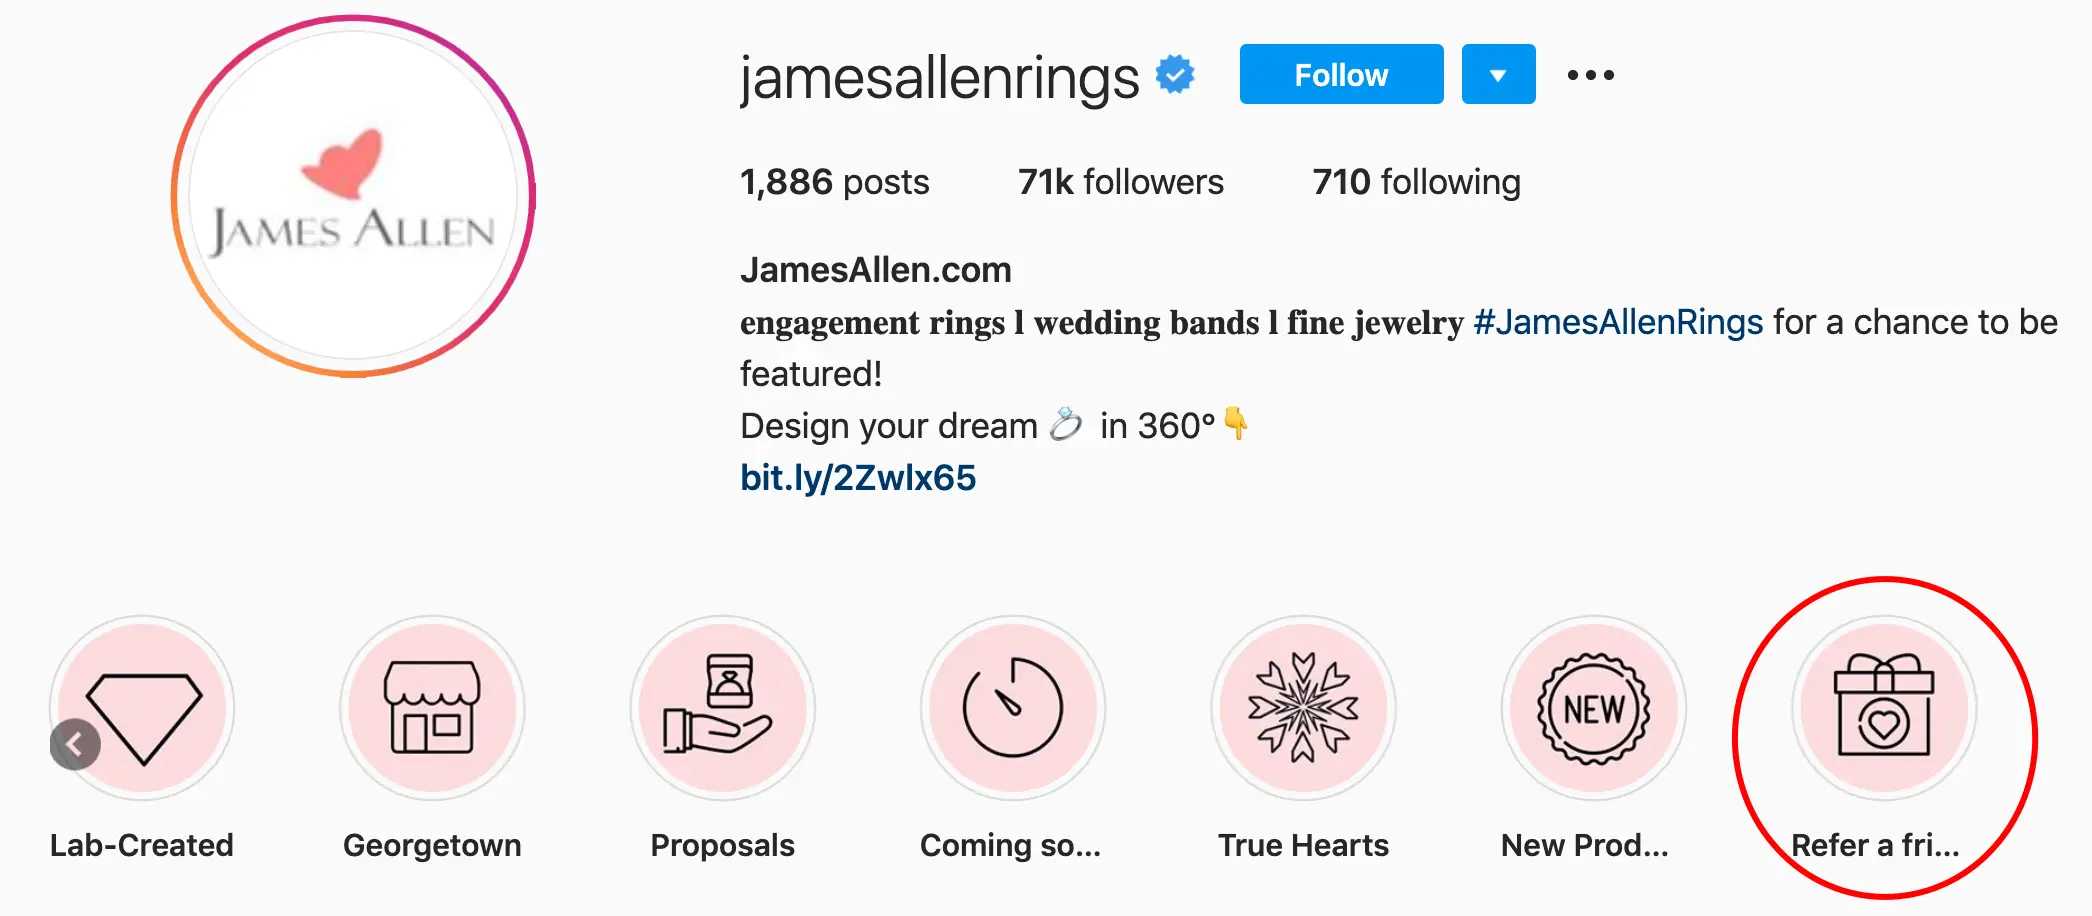 JamesAllen Instagram profile showcases referral program